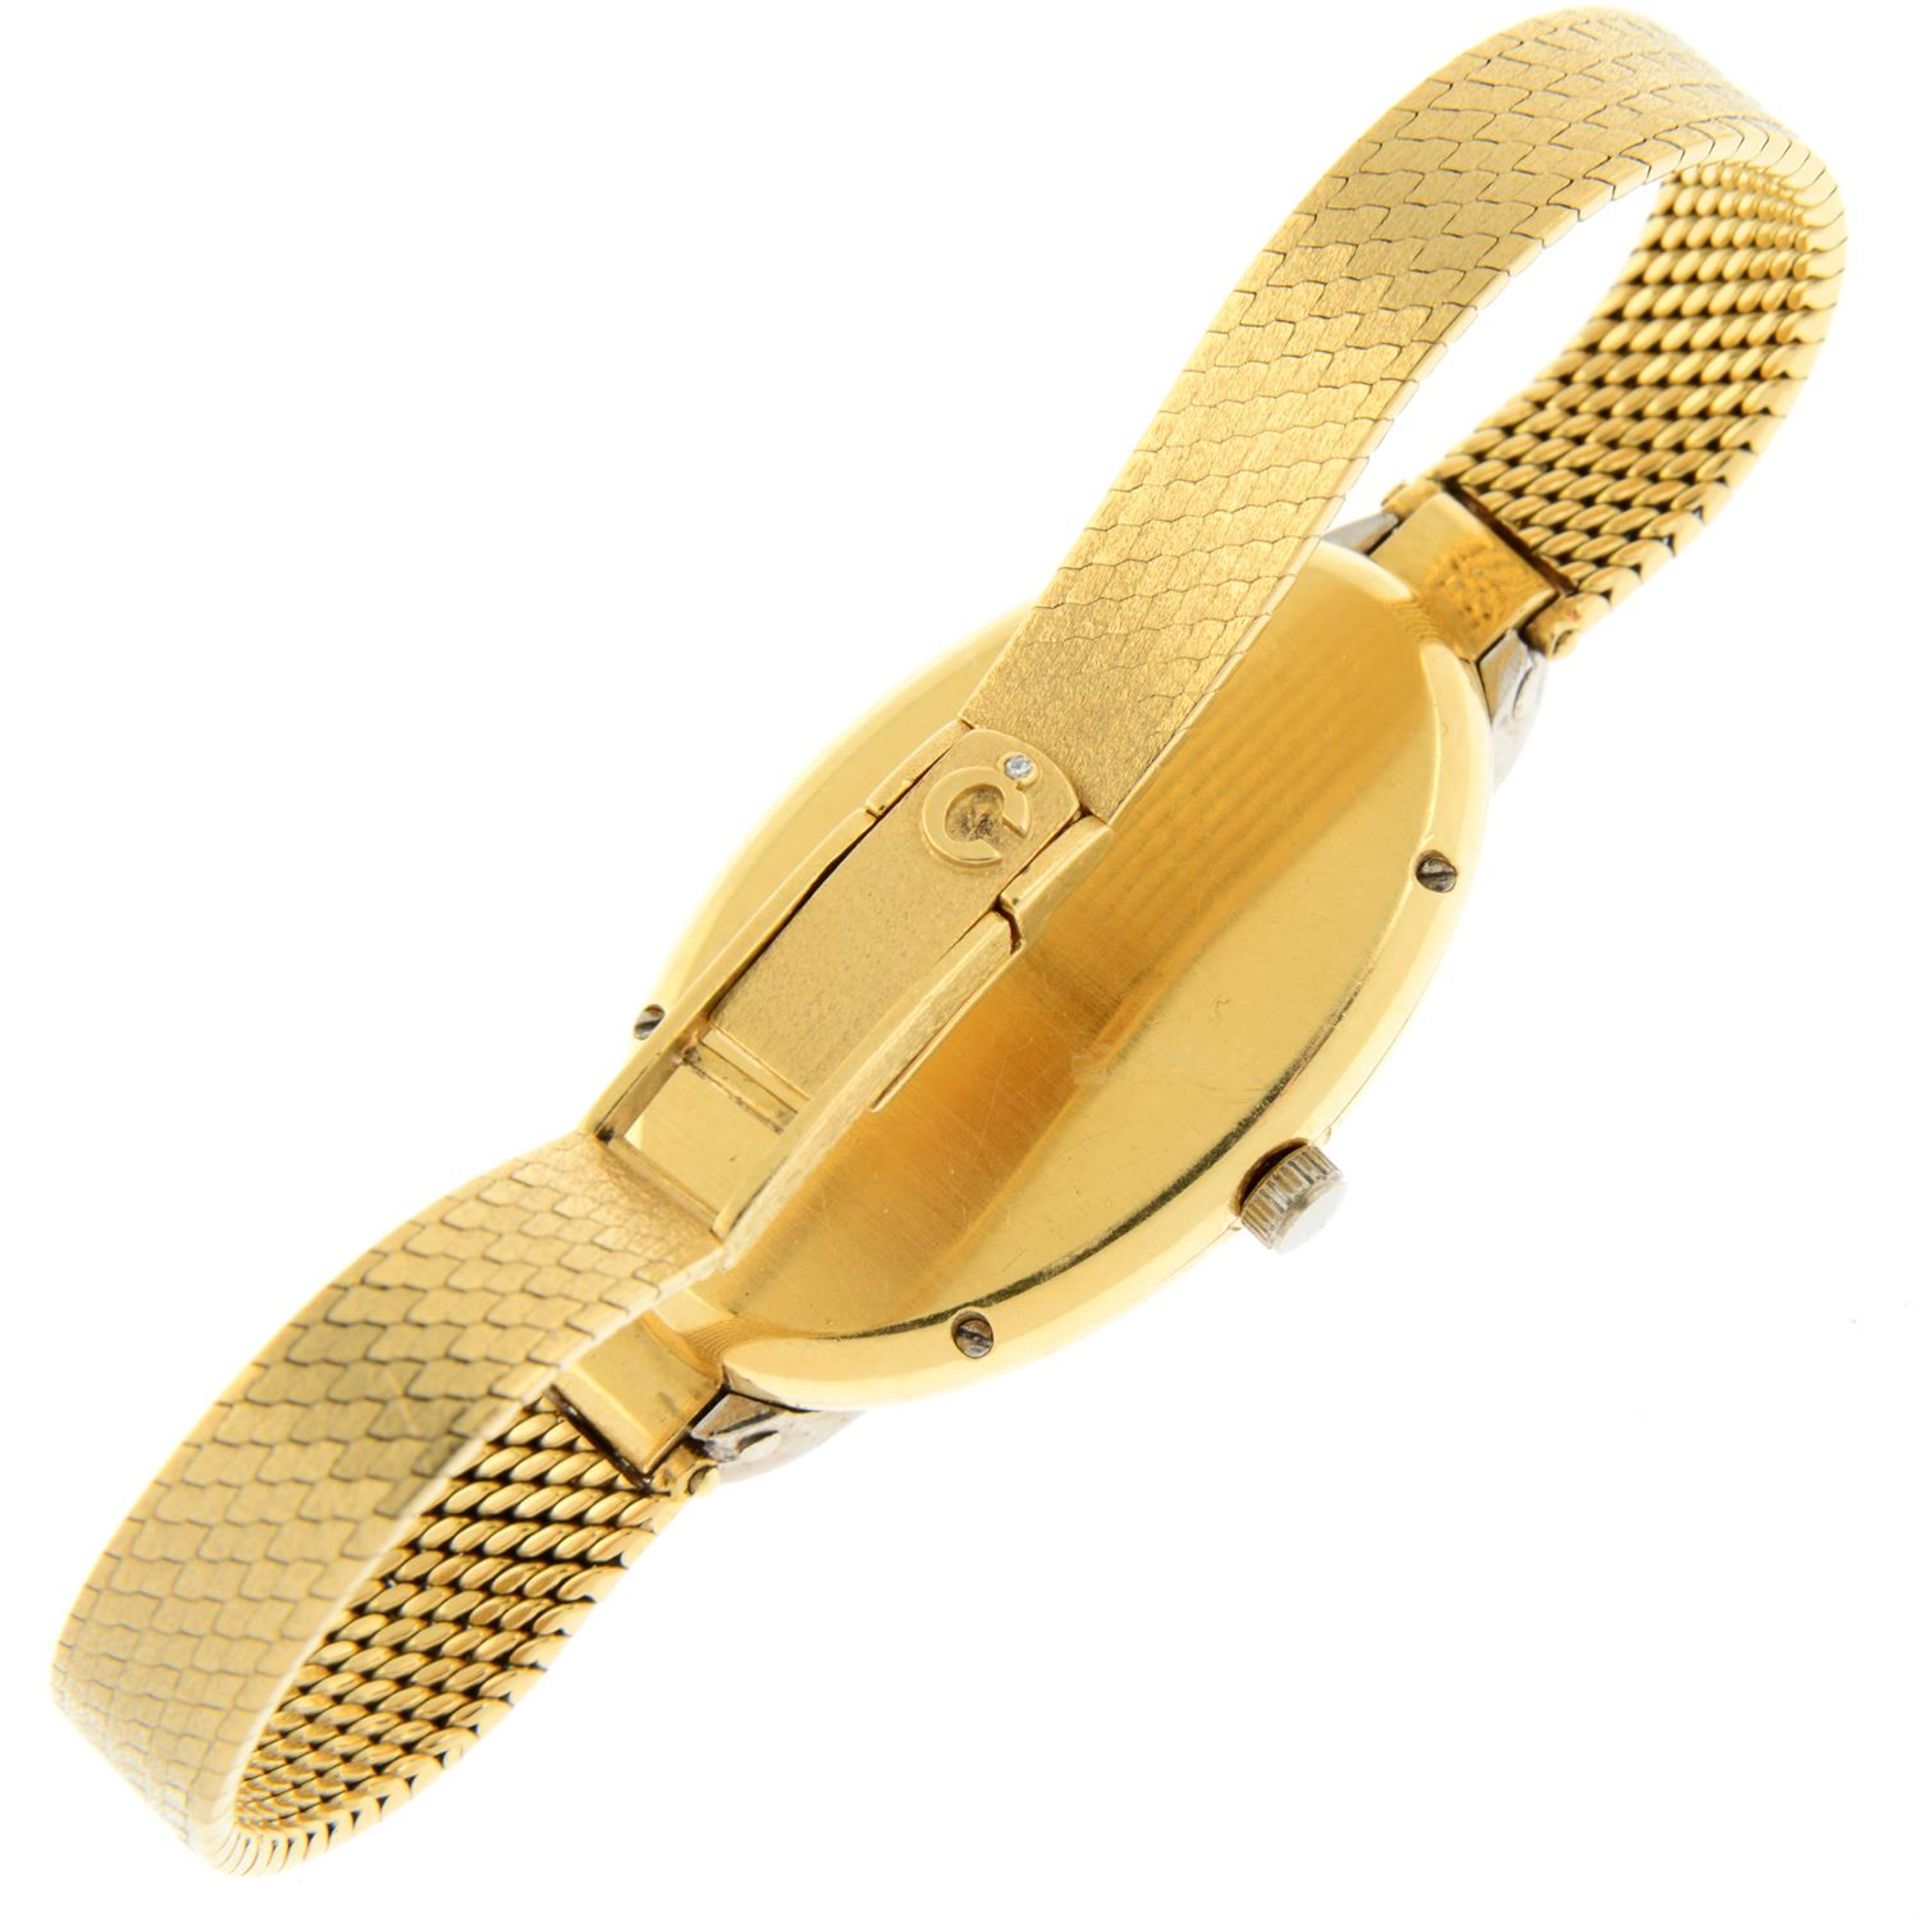 CHOPARD - a diamond set yellow metal bracelet watch, 22mm. - Image 2 of 5